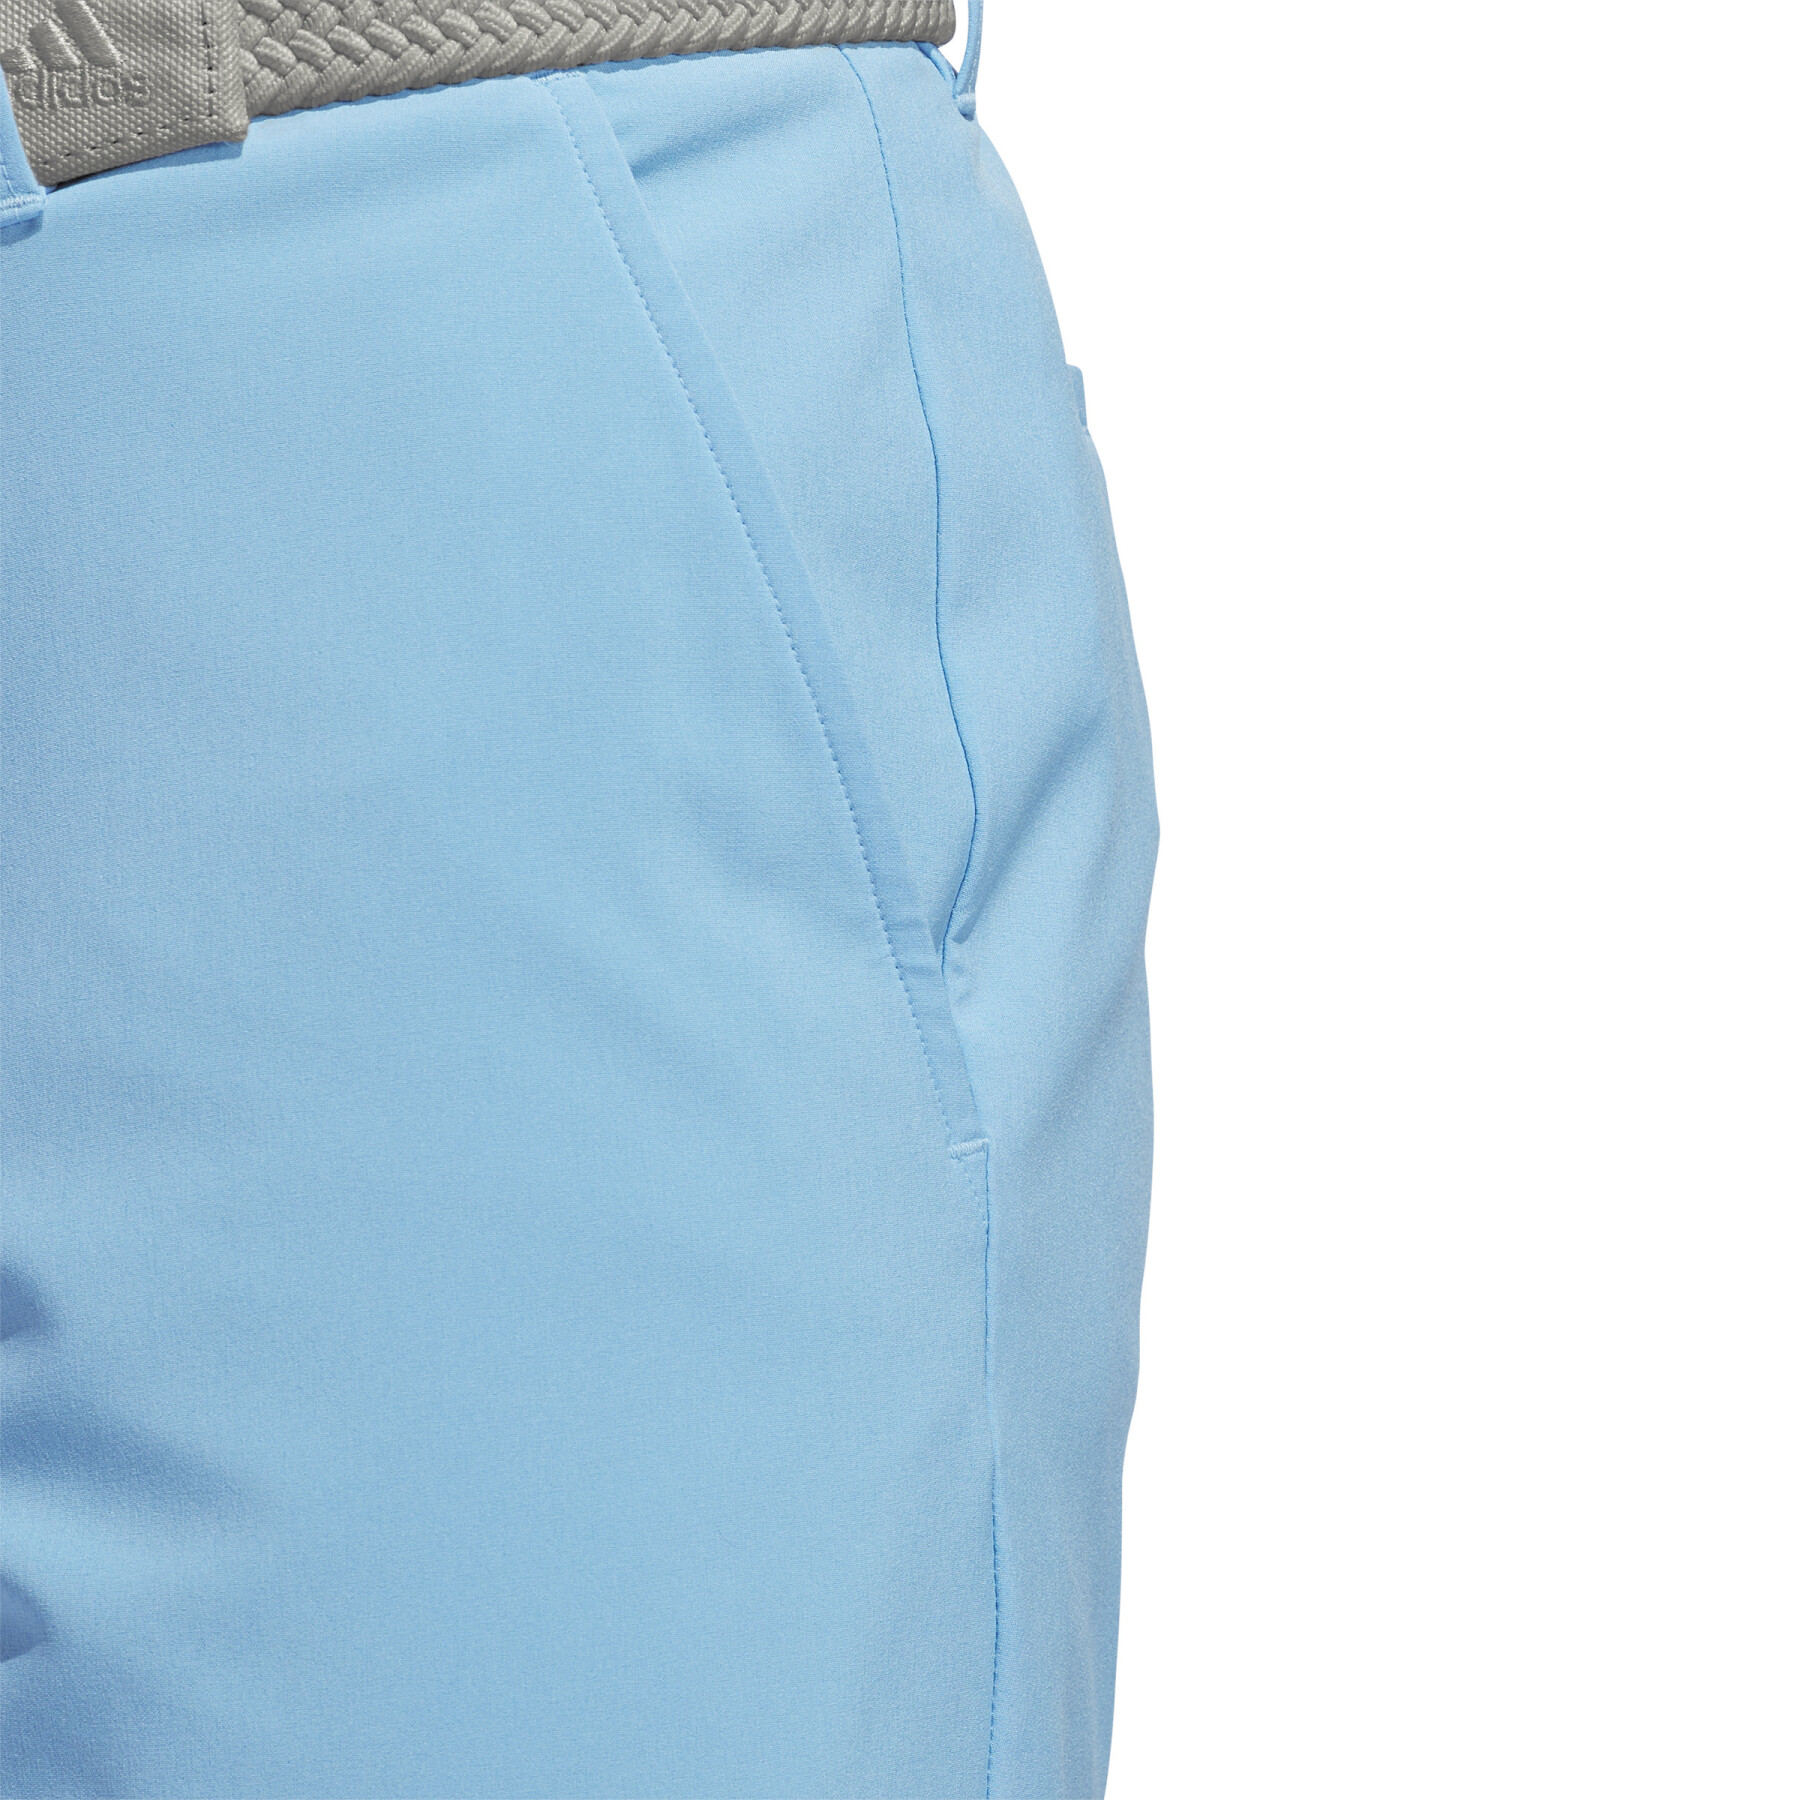 Bermuda shorts 8.5 inches adidas Ultimate